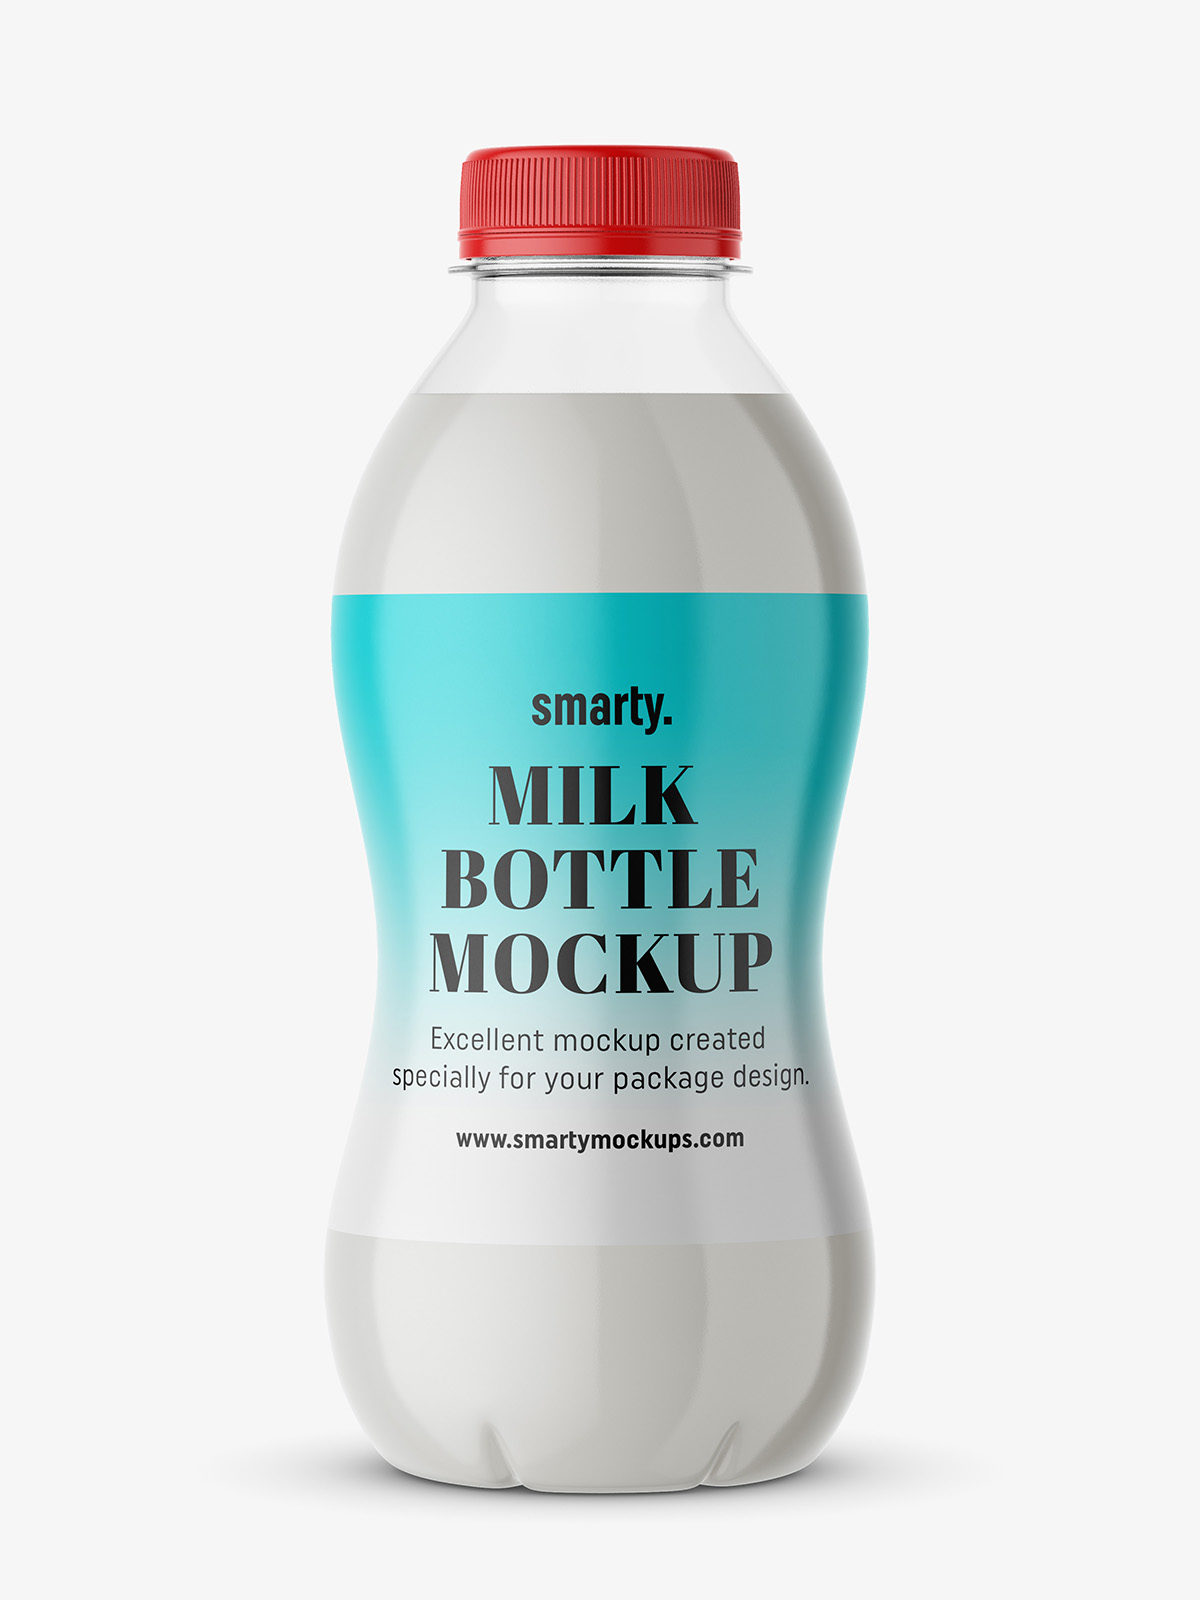 Milk bottle mockup - Smarty Mockups